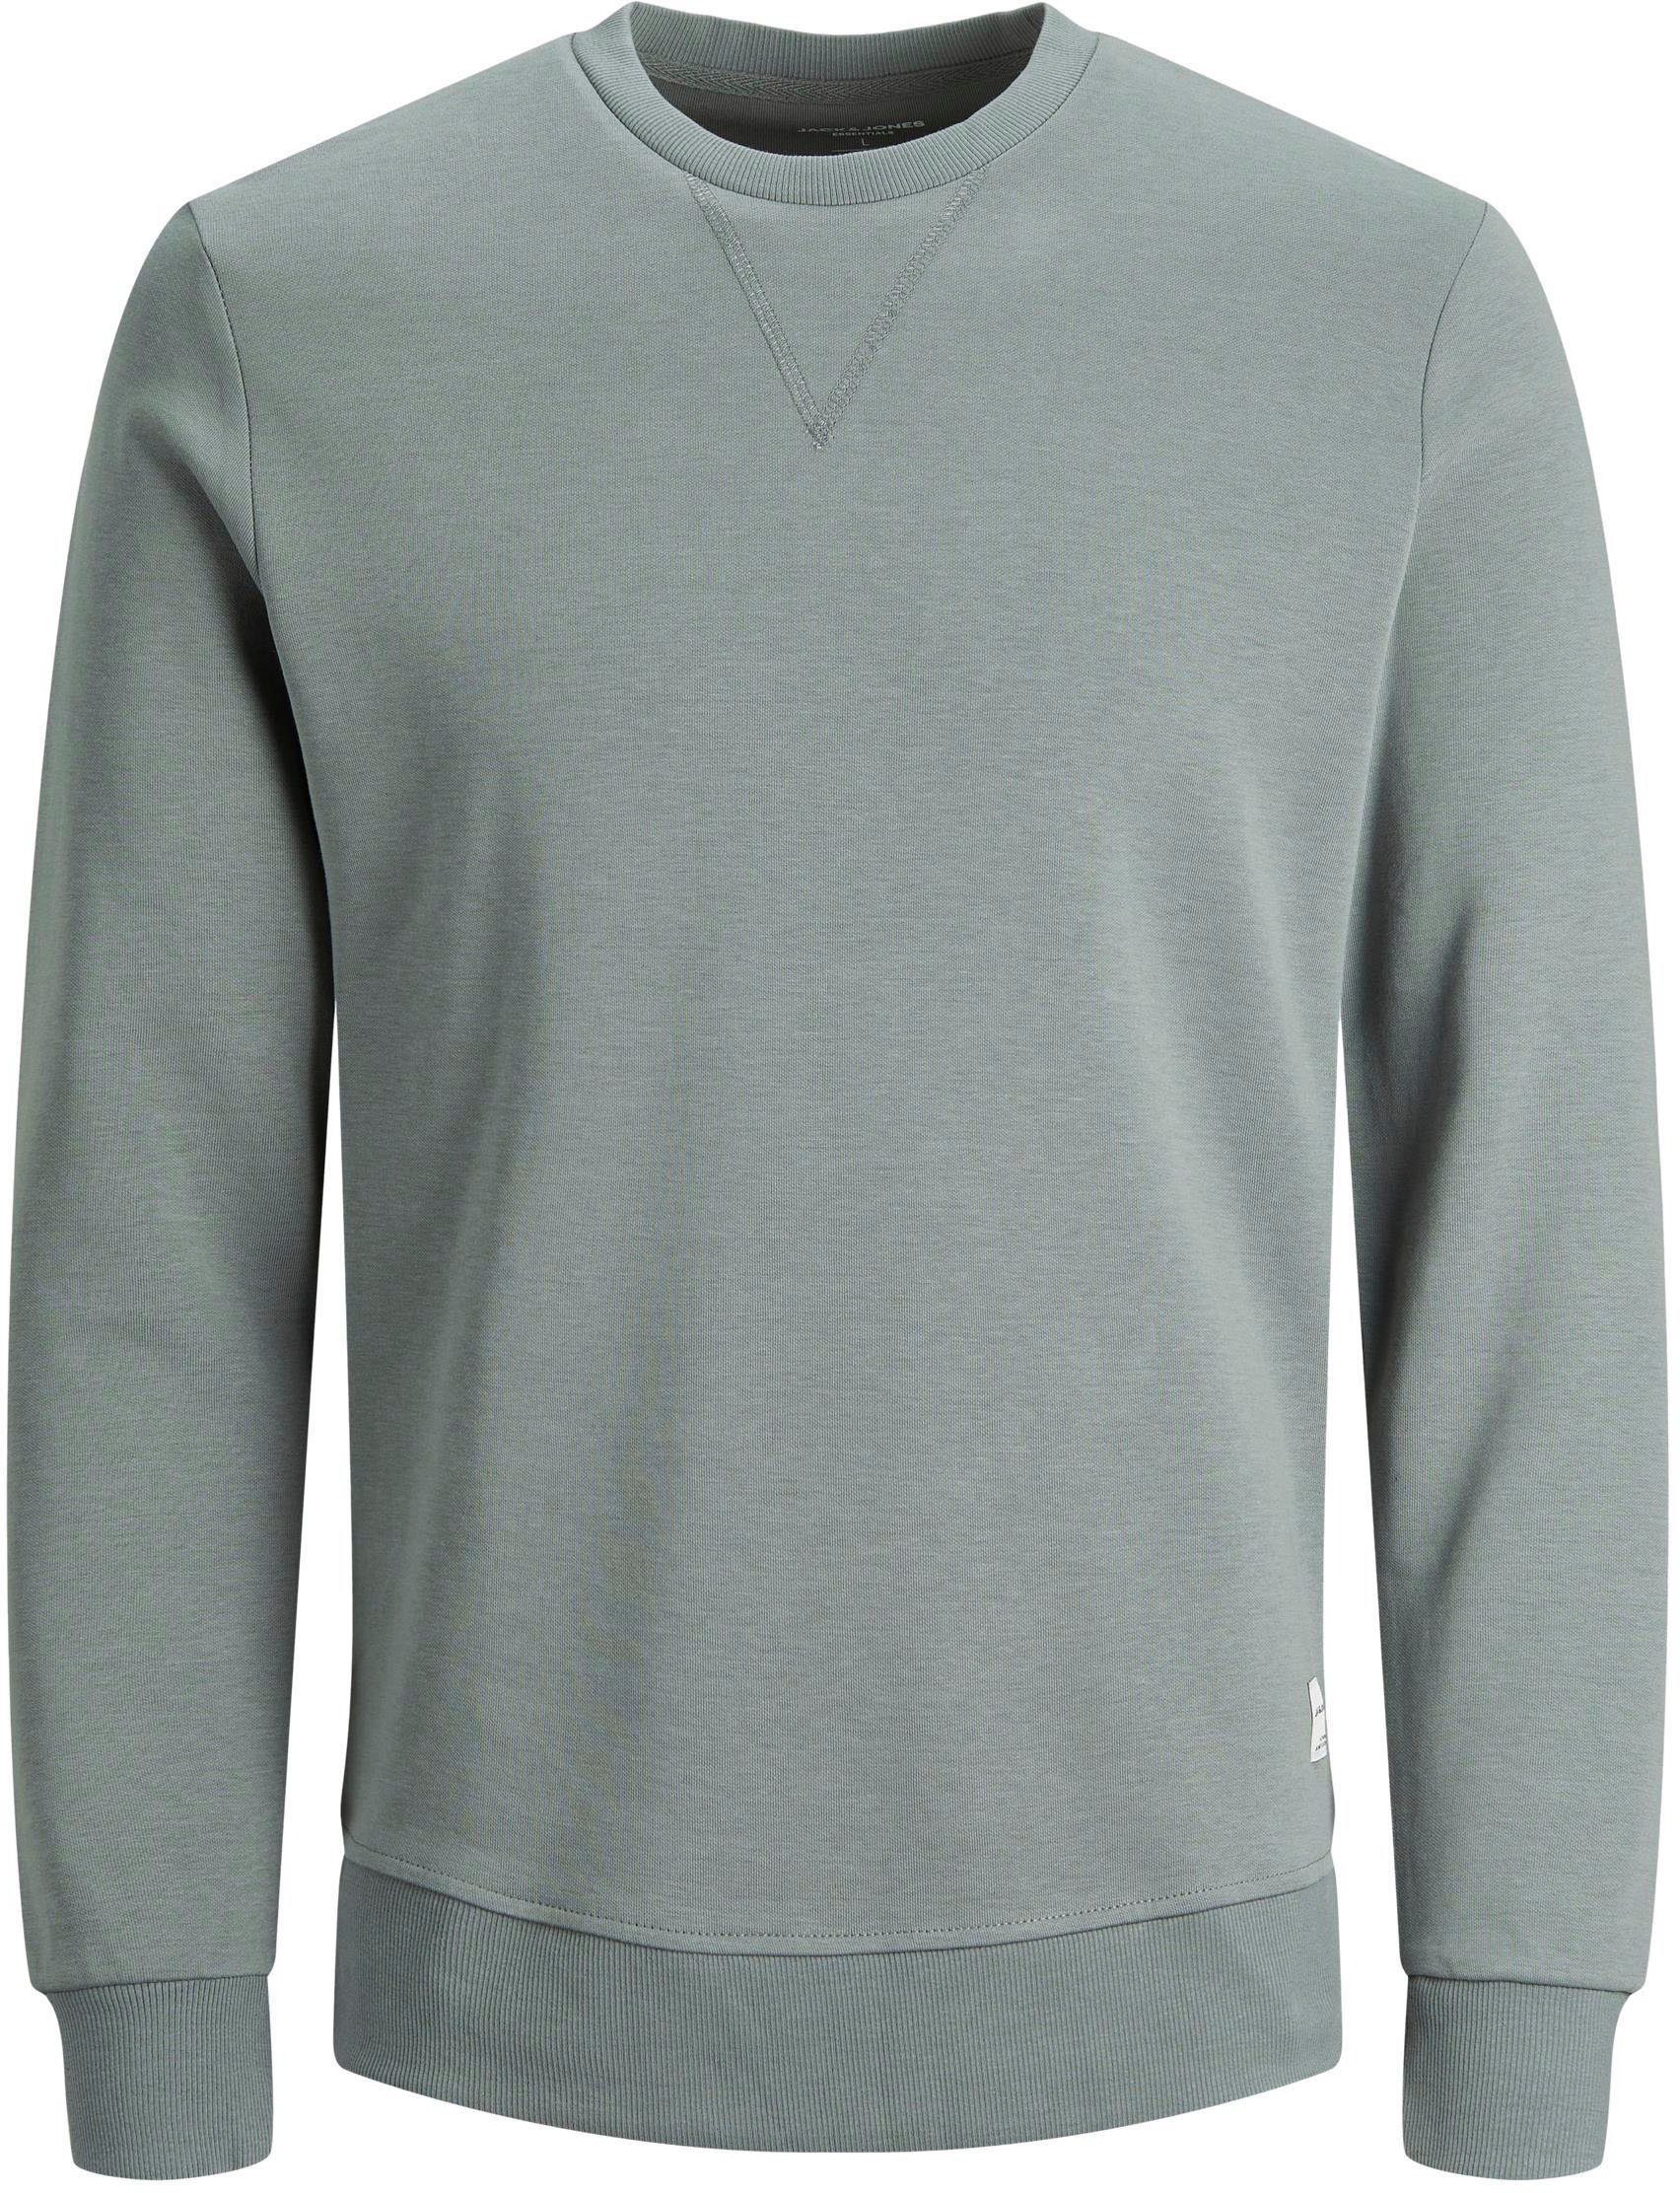 SWEAT BASIC Jones Jack & graugrün Sweatshirt